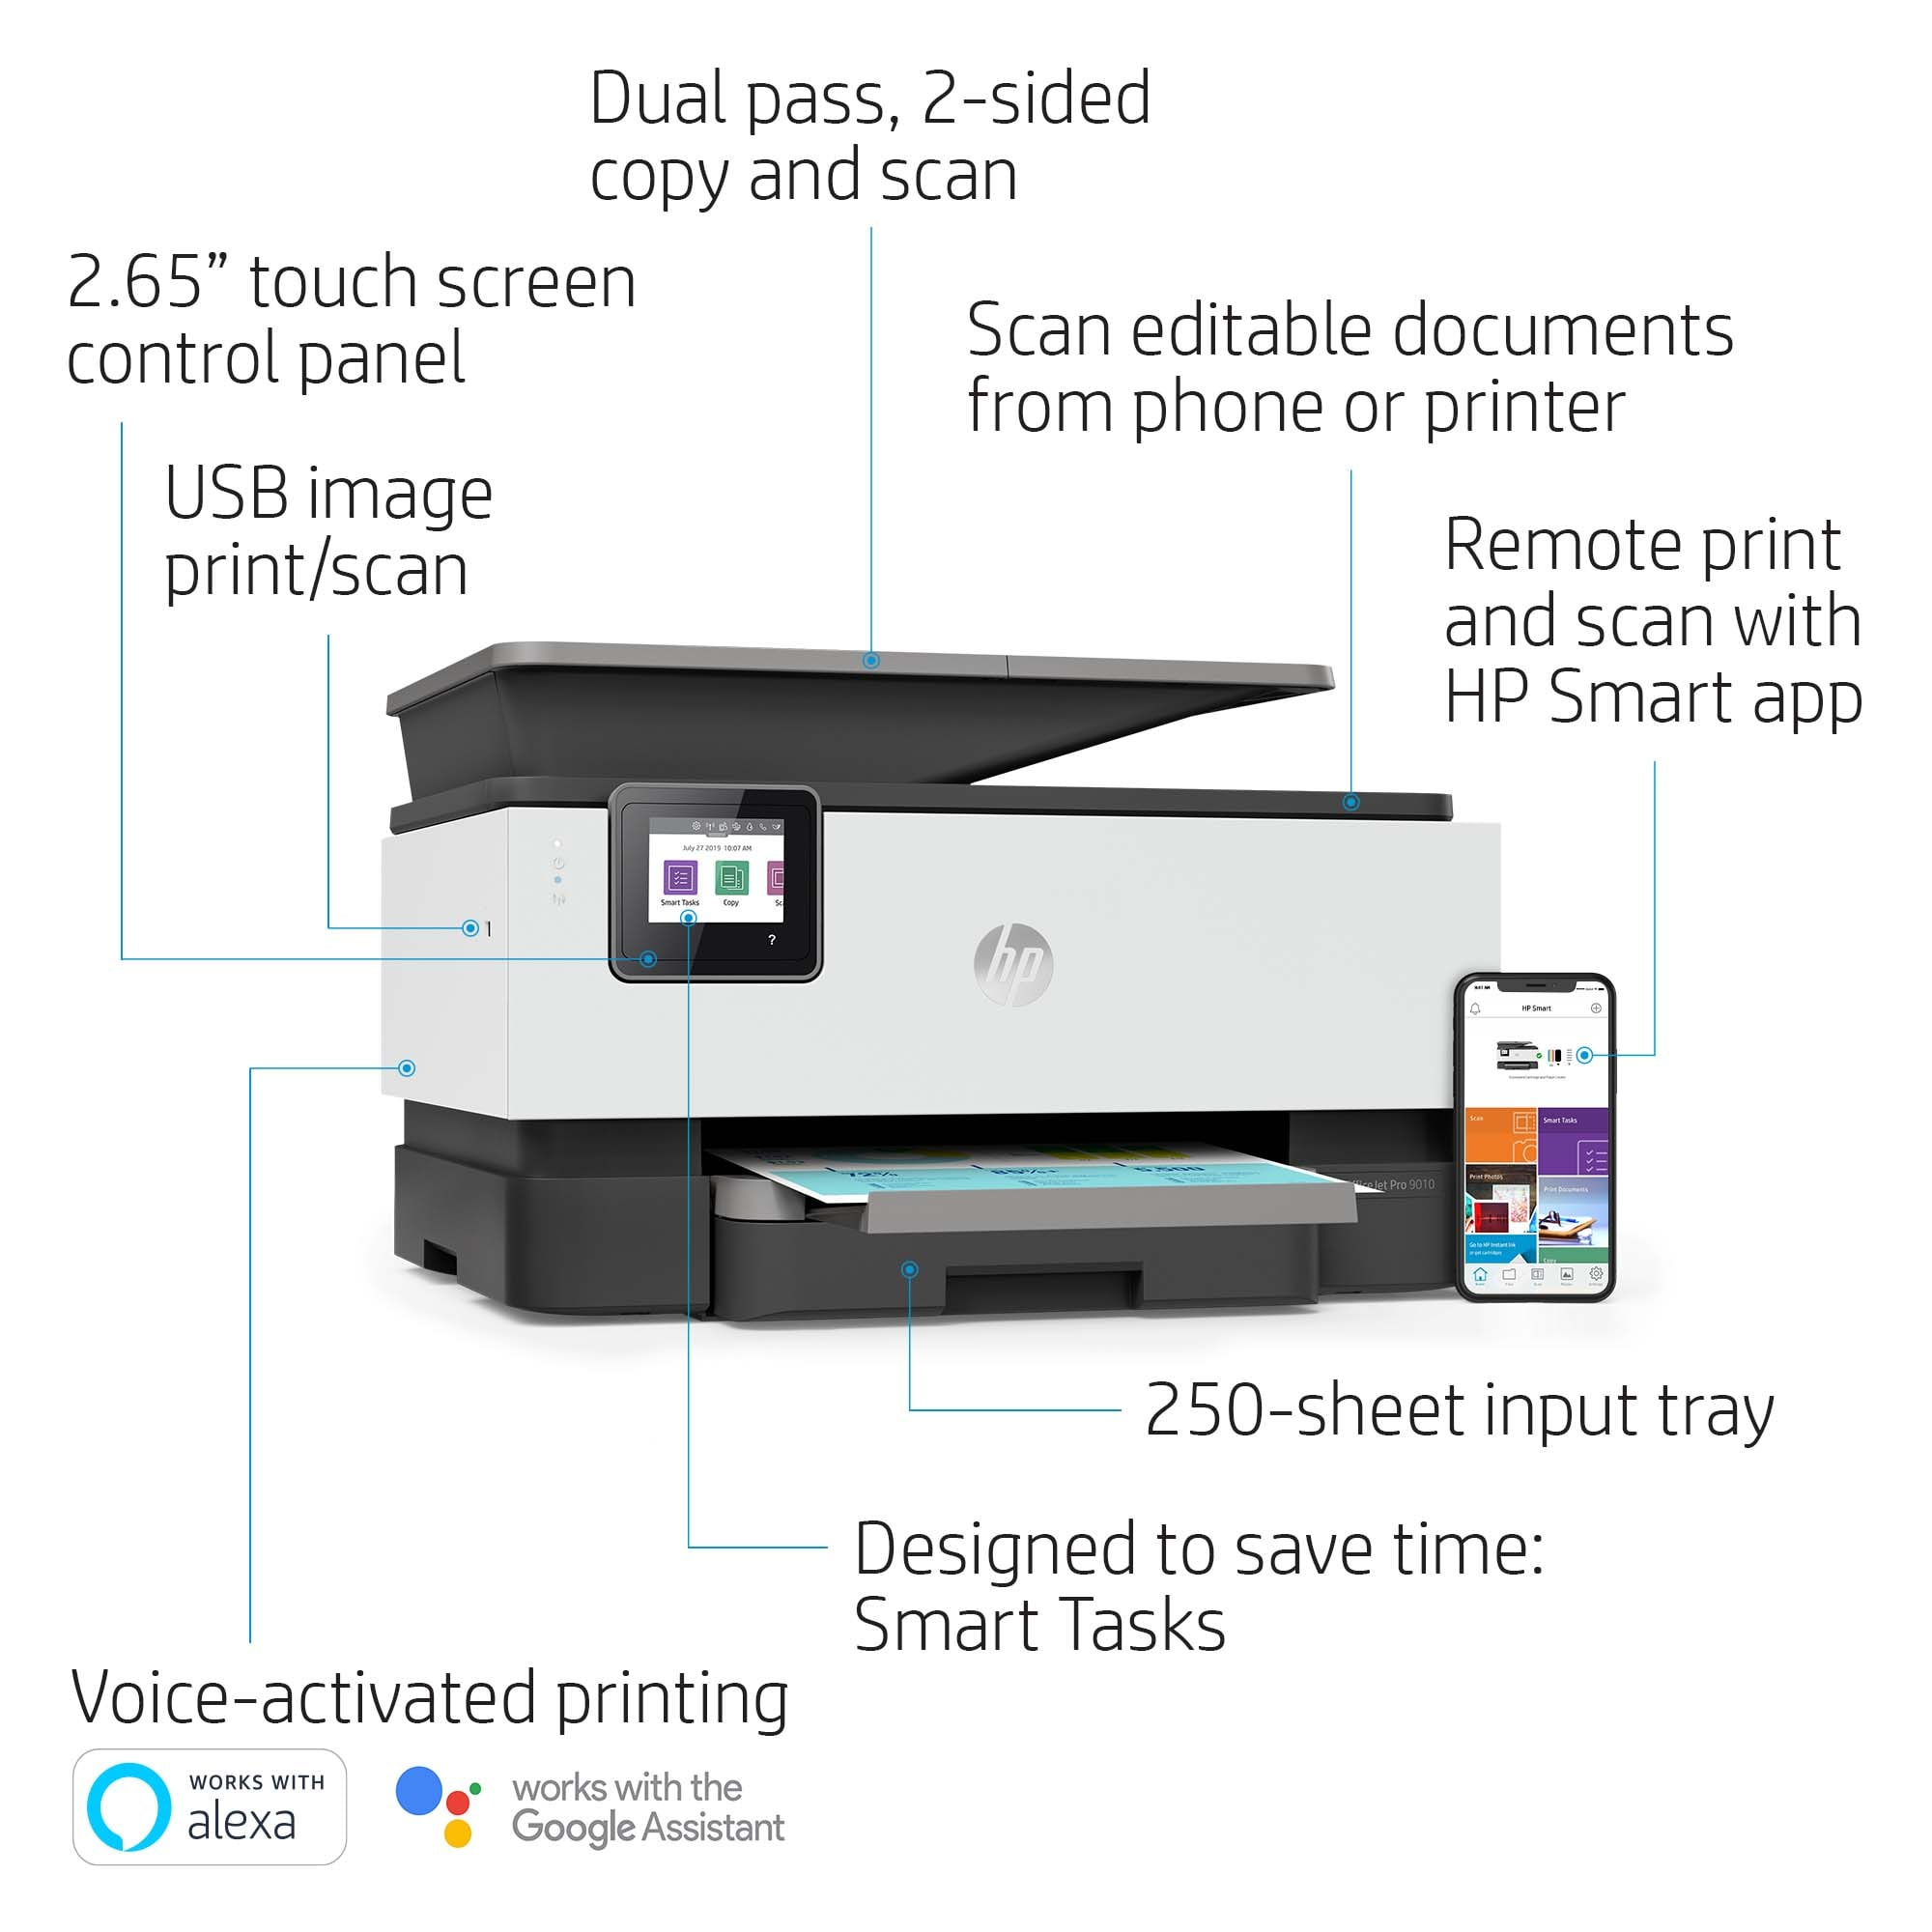 HP OfficeJet Pro 9010 all in 1 printer